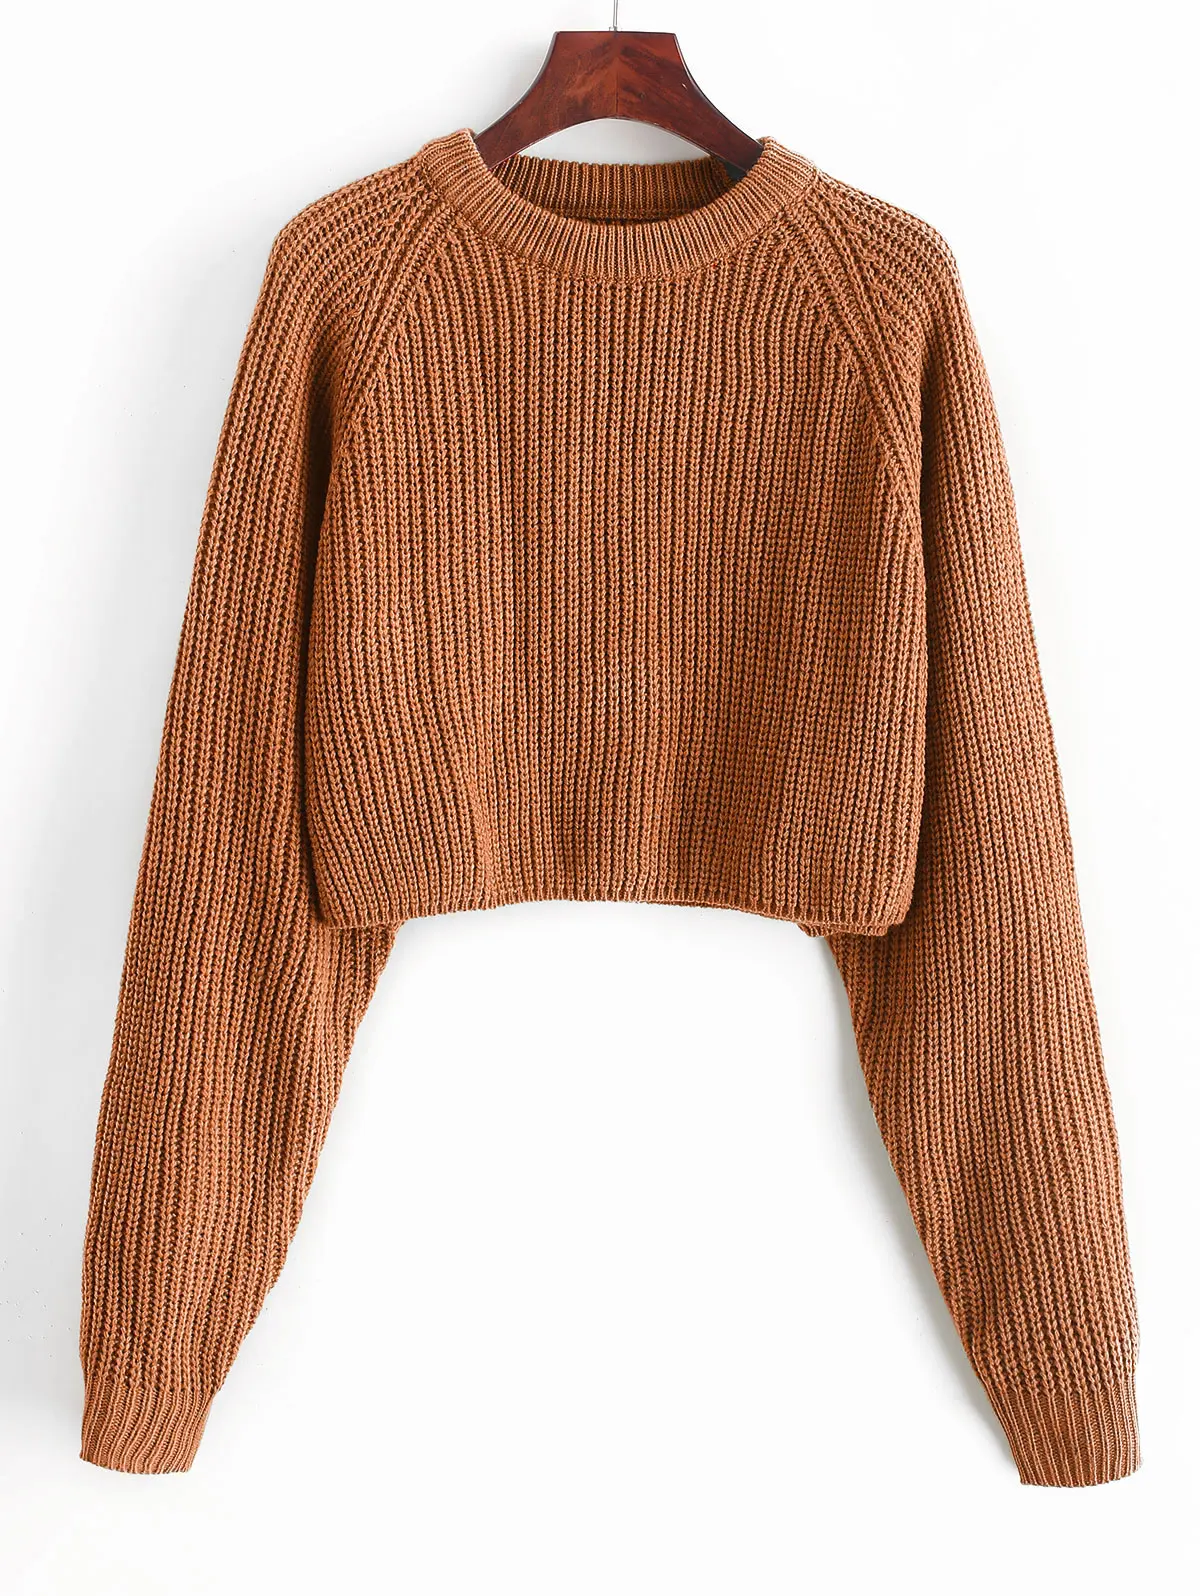 ZAFUL Women Crop Sweaters Knitted Women'S Pullovers Female O Neck Raglan Sleeve Short Warm Sweaters Fall Winter - Цвет: Tiger Orange